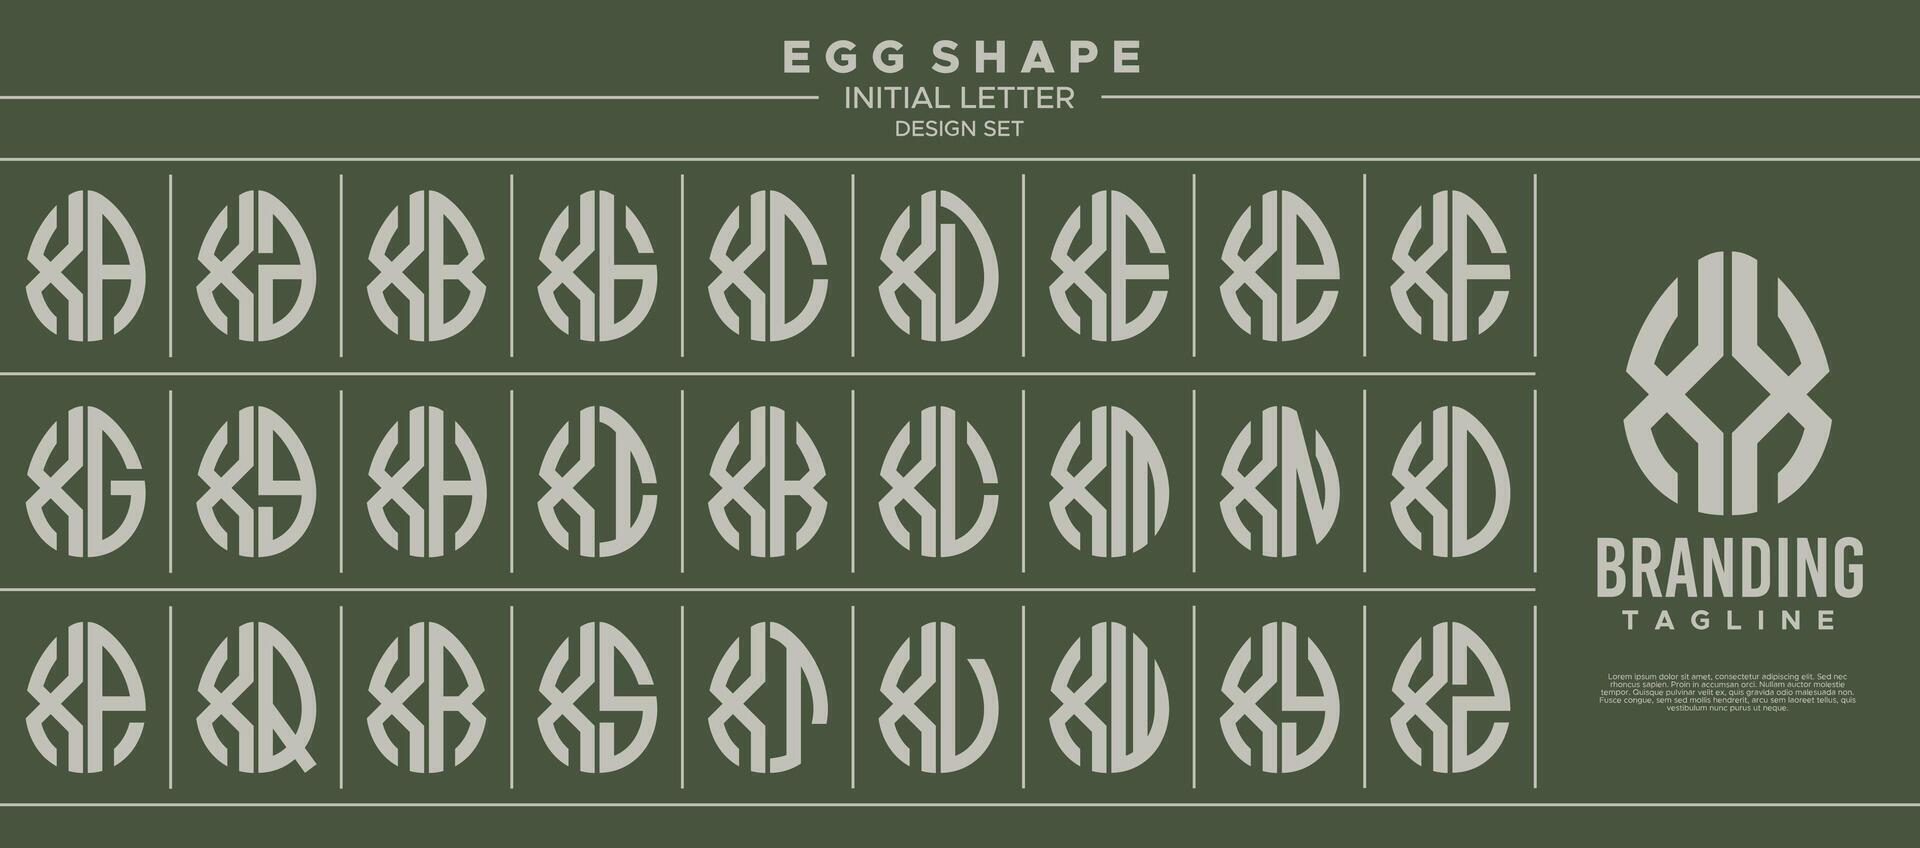 colección de comida huevo forma inicial letra X xx logo diseño vector